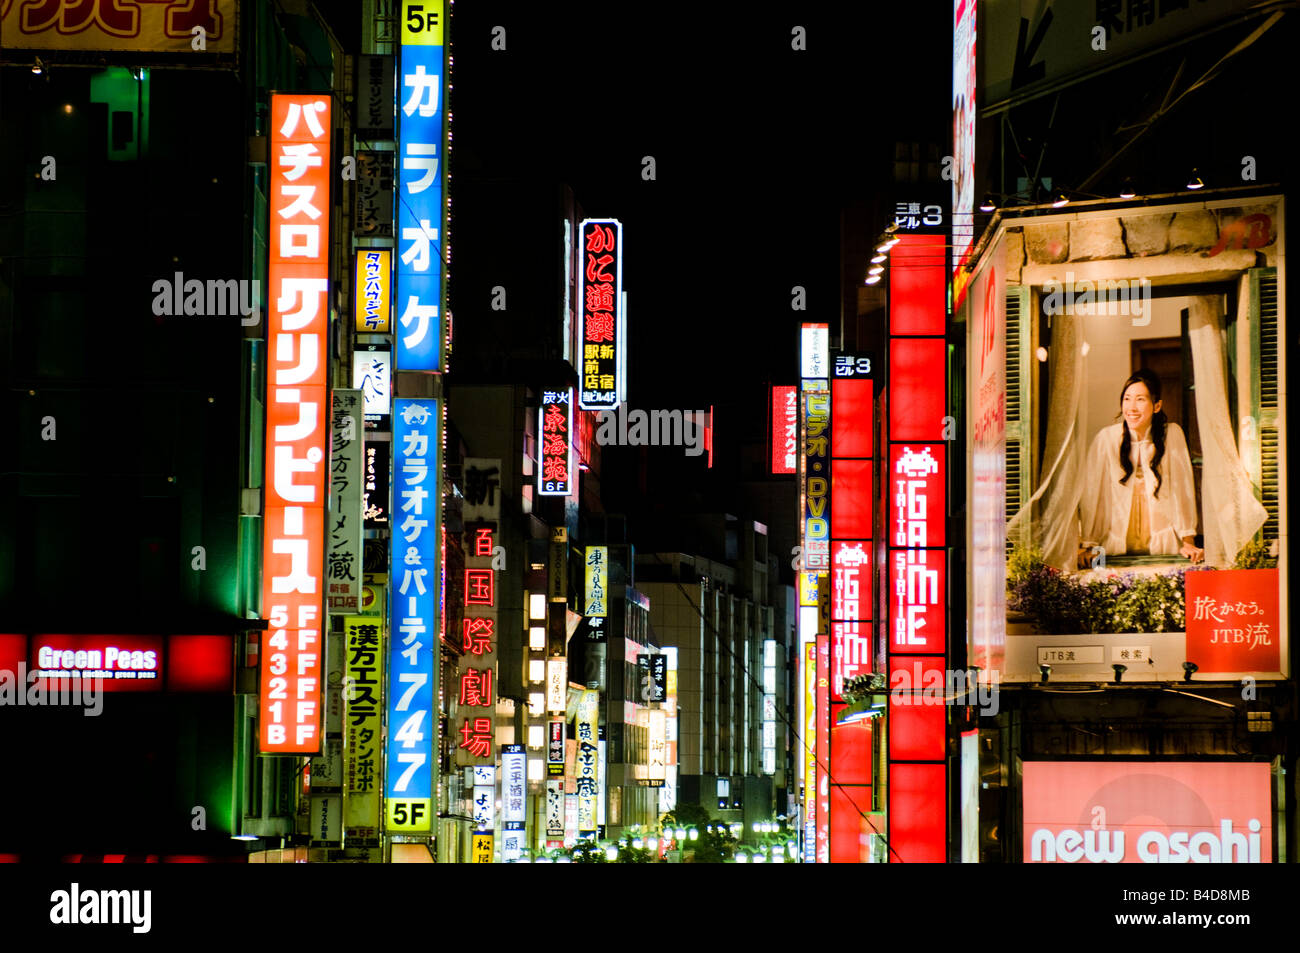 Shinjuku night image Stock Photo